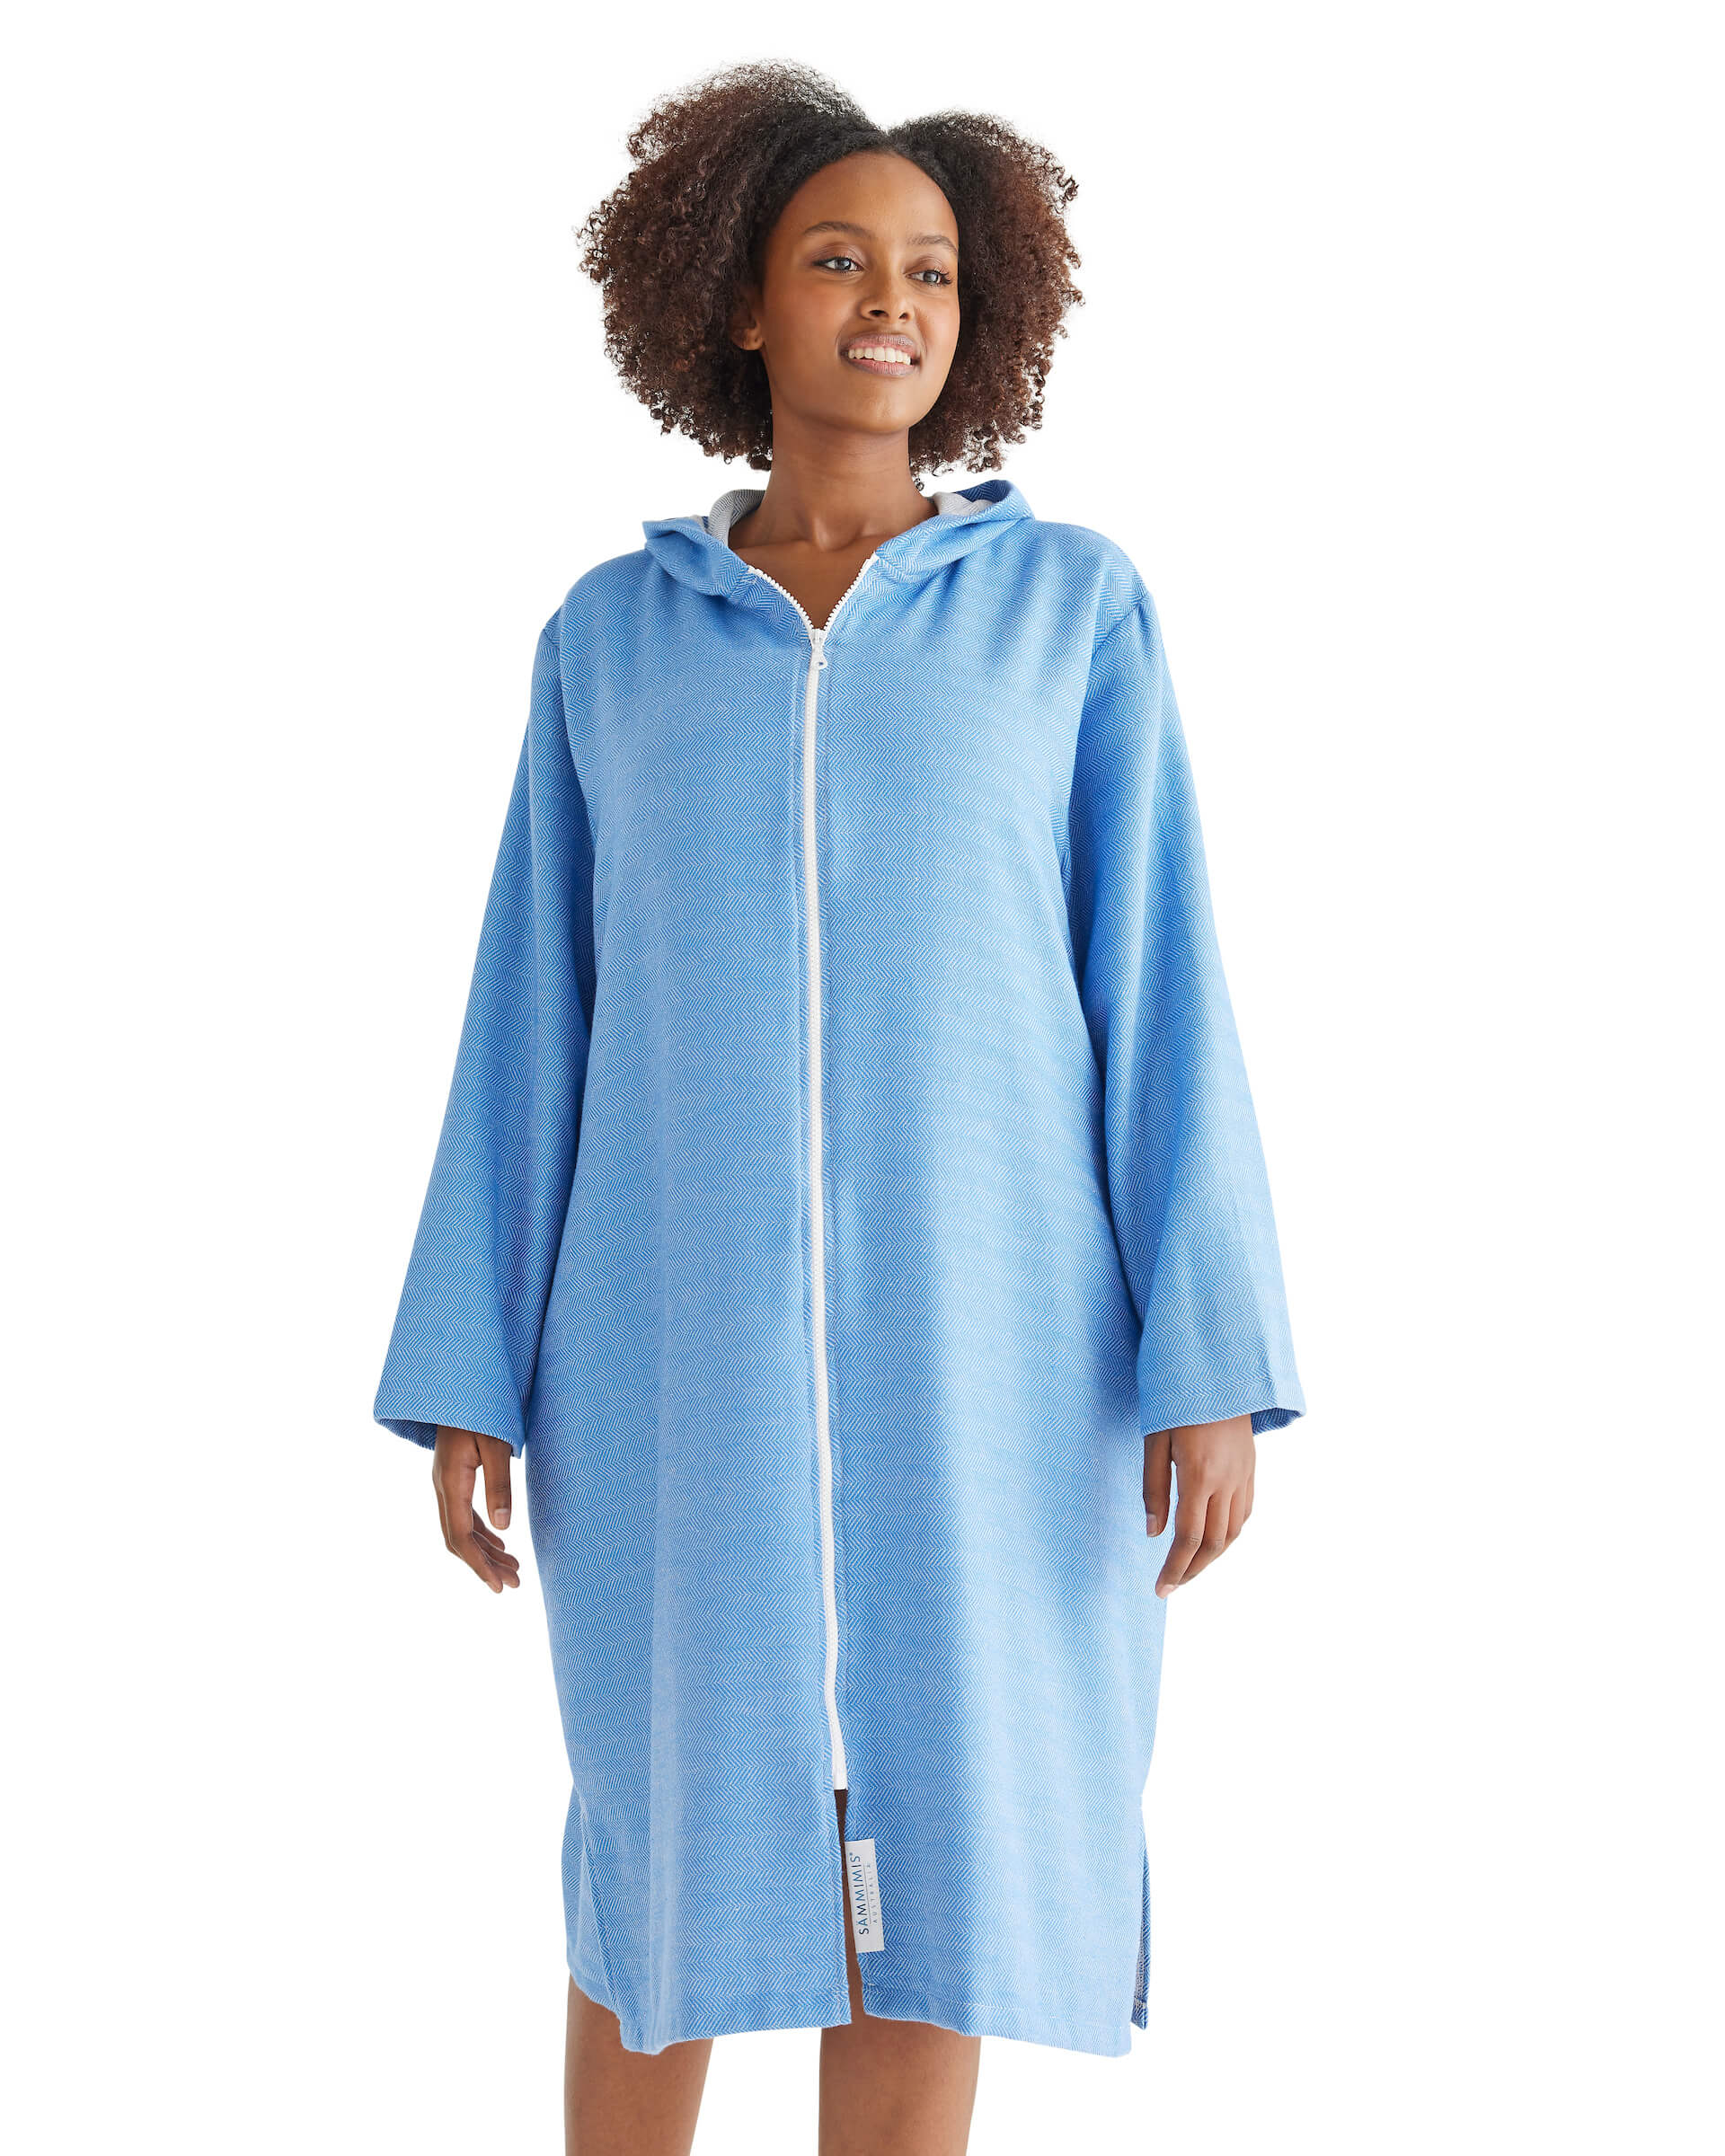 LA PELOSA Adult Hooded Towel Plus Size: Royal Blue